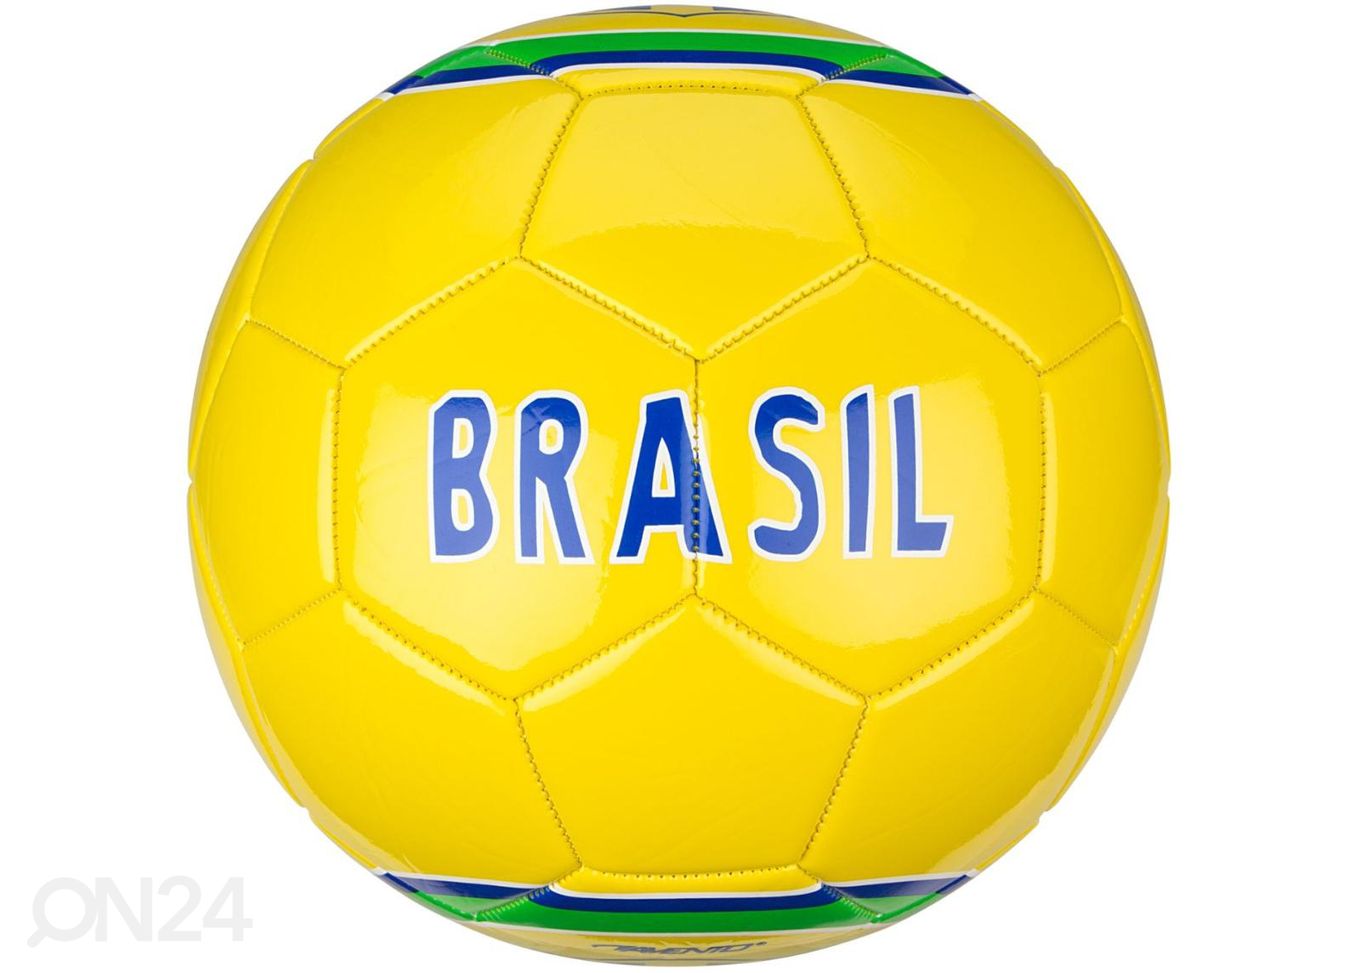 Jalgpall World Soccer Avento suurendatud